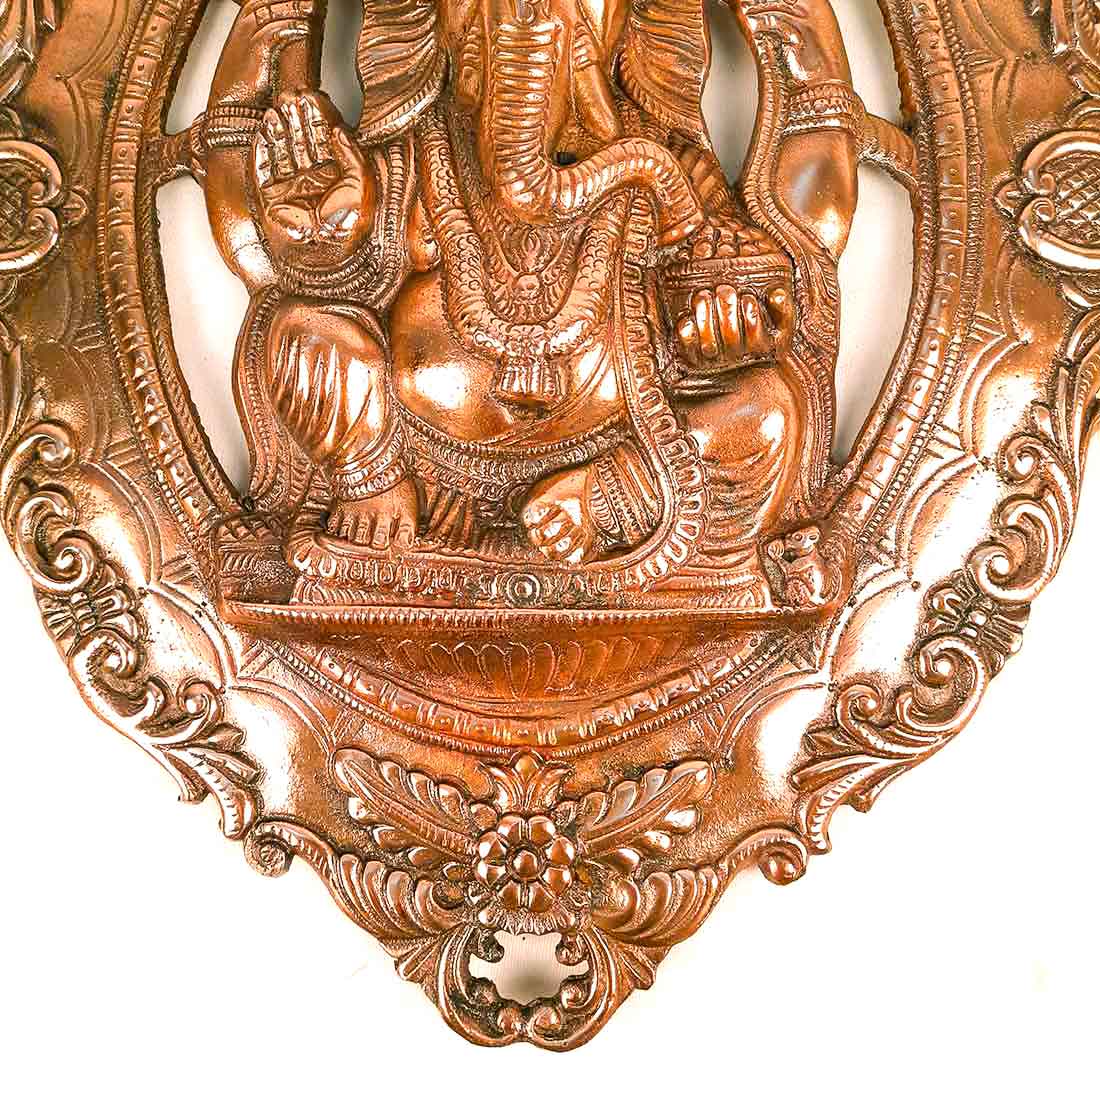 Ganesh Wall Hanging Idol Big | Lord Ganesha Statue Wall Art - For Puja, Home & Main Gate |Religoius & Spiritual Decor for Living Room - 20 Inch